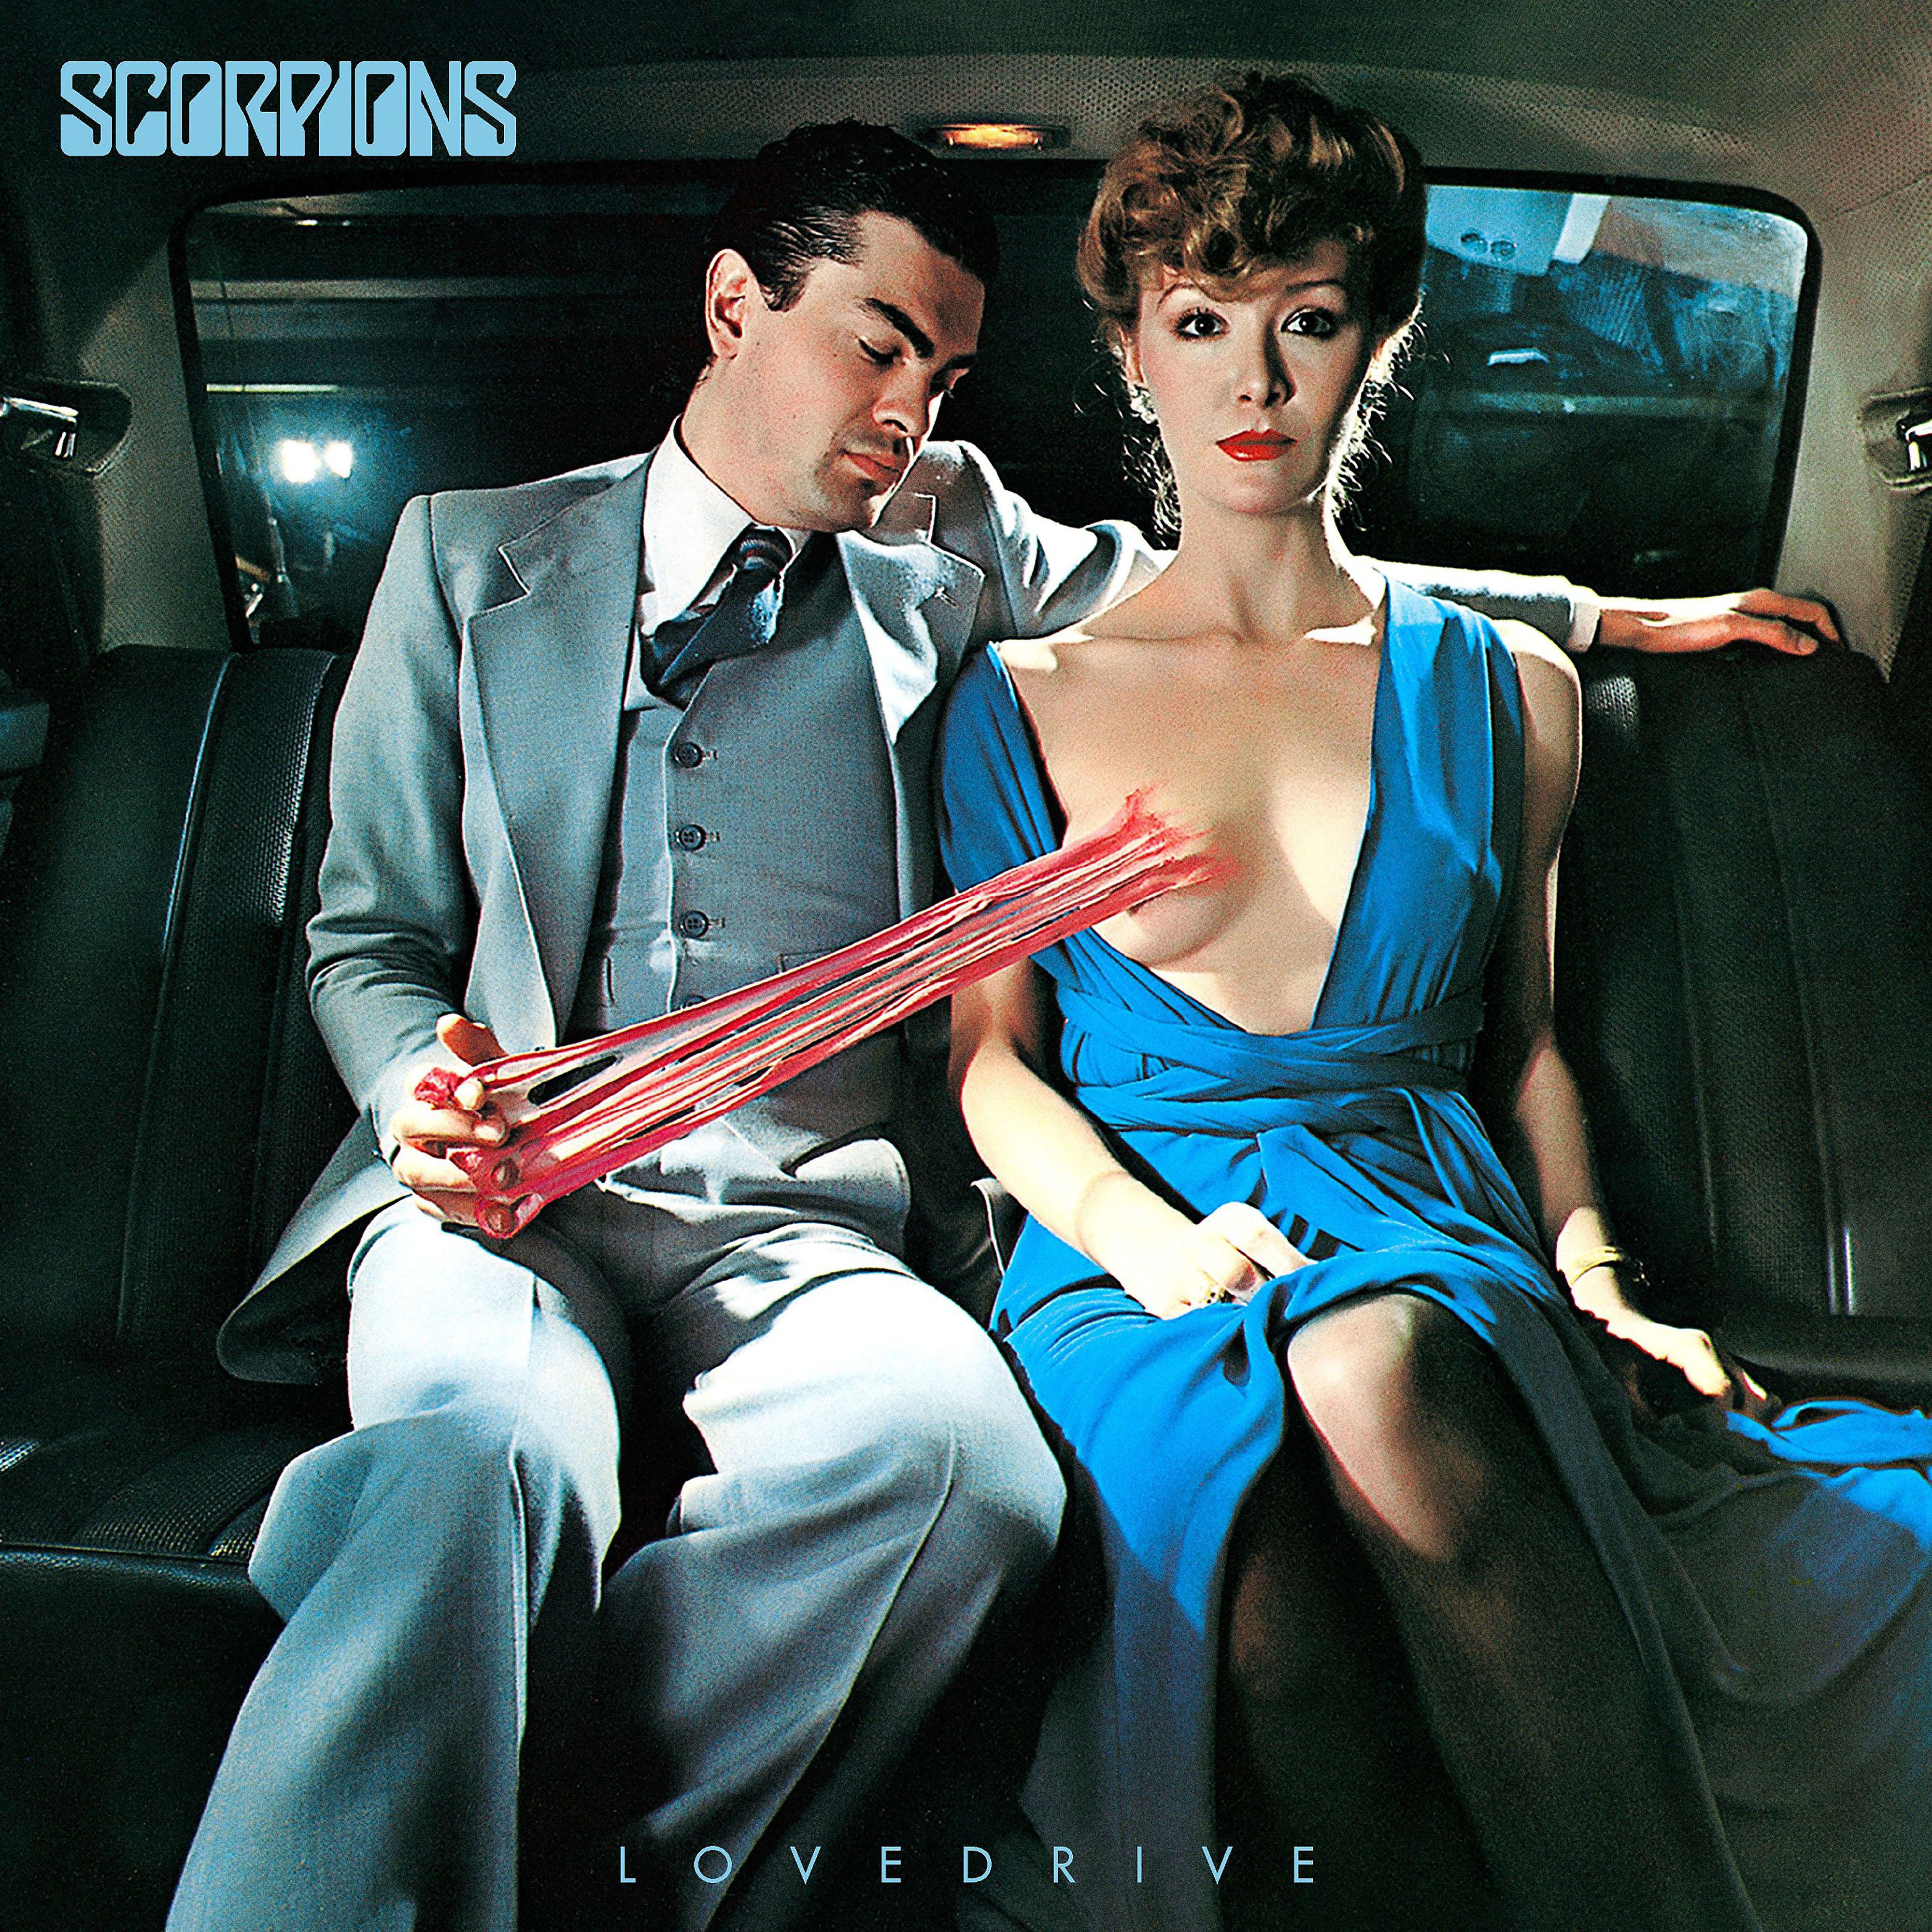 She d better. Scorpions "Lovedrive". Scorpions Lovedrive 1979. Scorpions Lovedrive обложка. Scorpions Lovedrive 1979 Deluxe Edition.